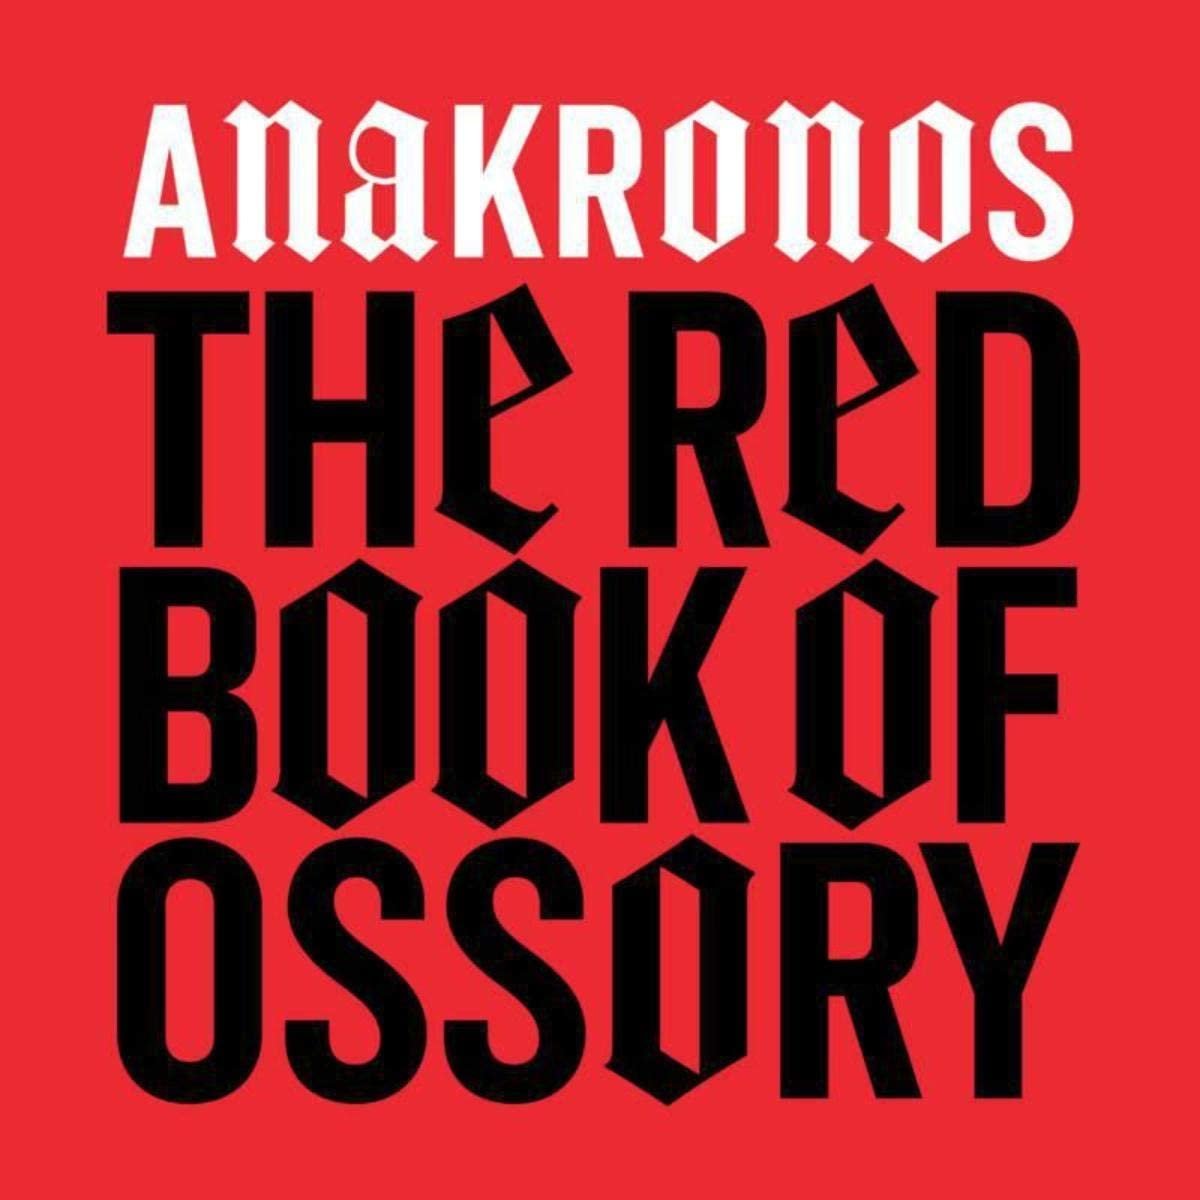 Anakronos Ossory